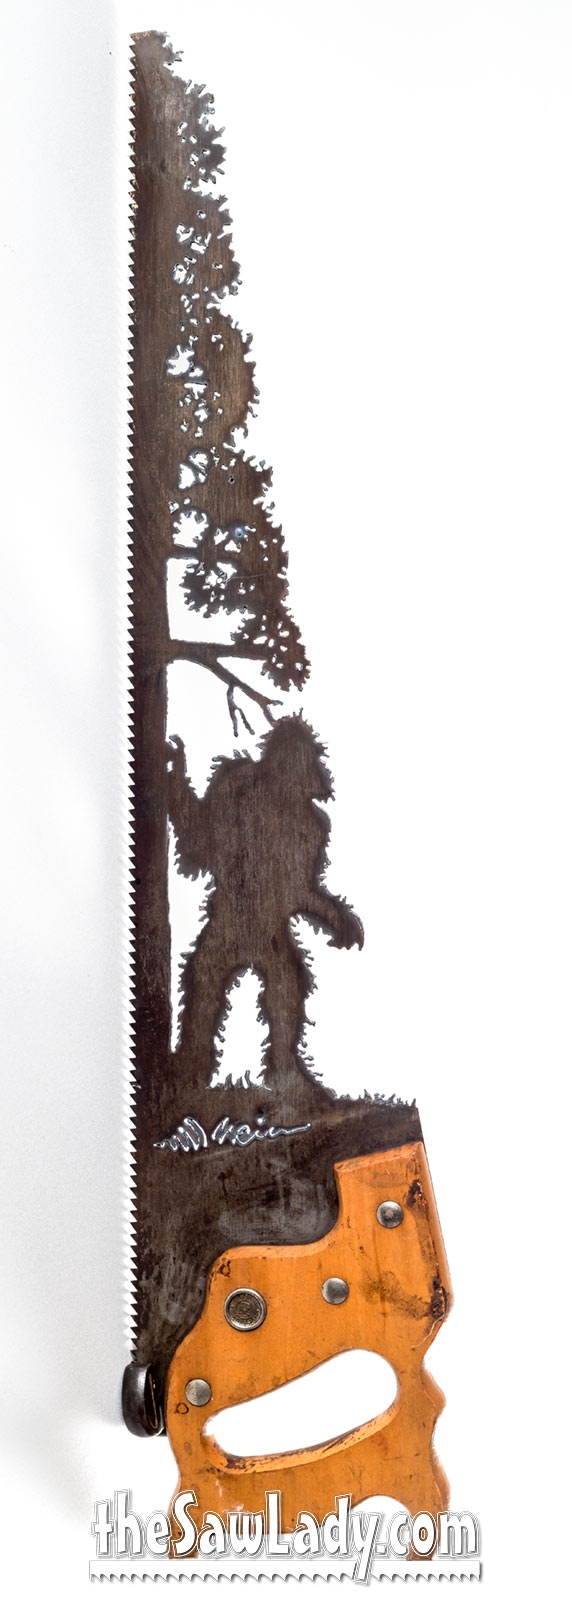 bigfoot sasquach metal art saw